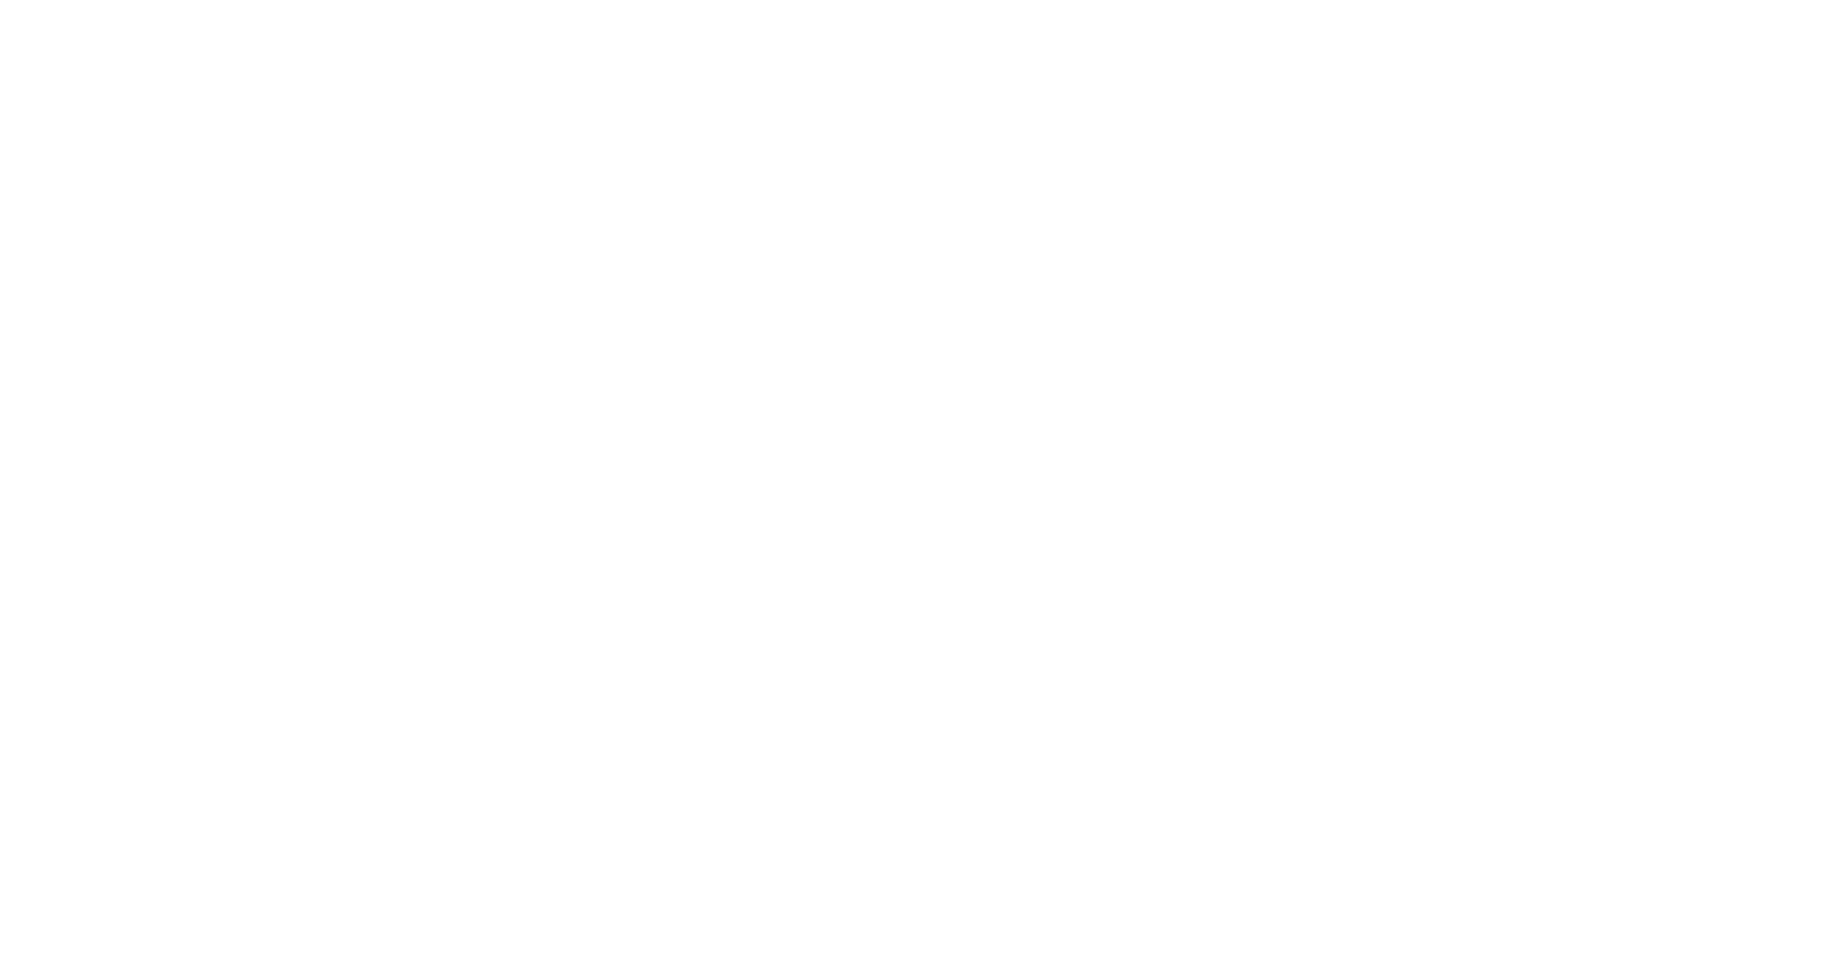 Paul Neasham Accountancy Limited Chartered Accountants